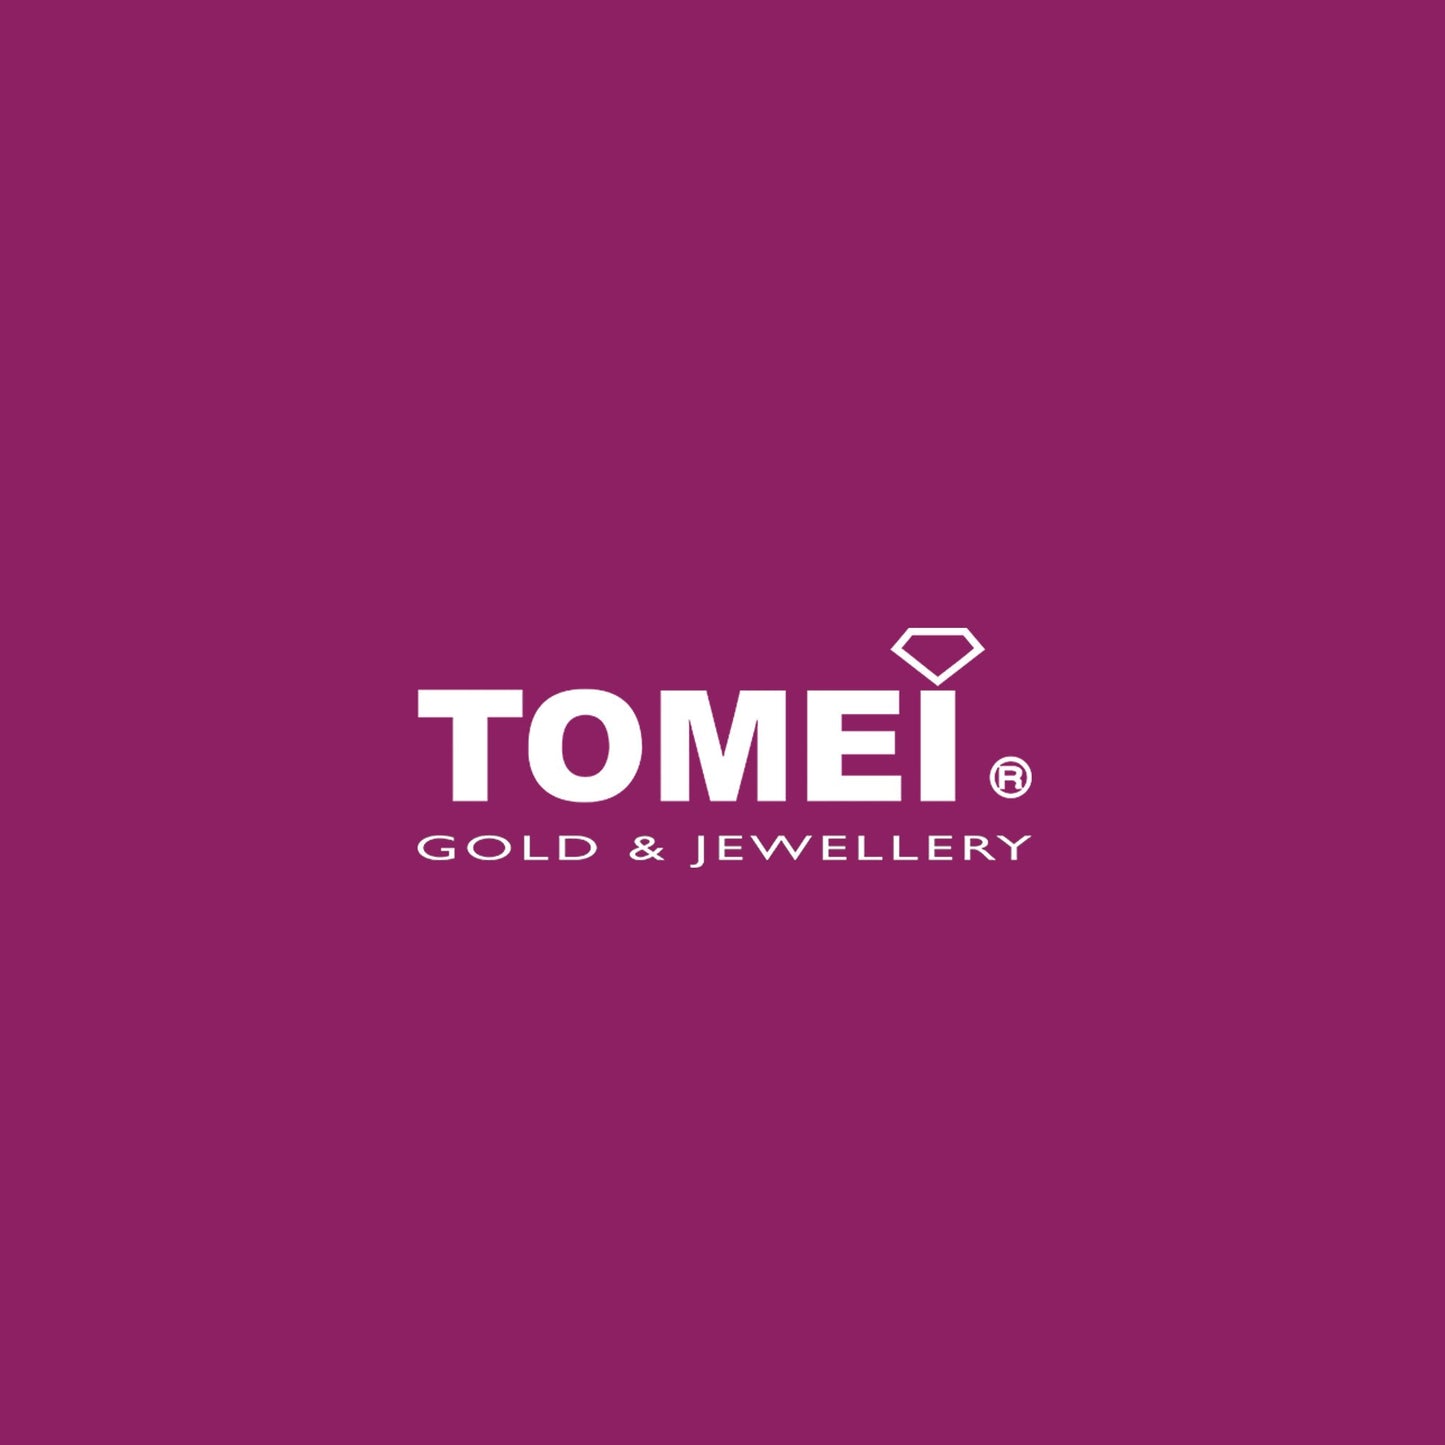 TOMEI Rose Charm, Yellow Gold 916 (TM-YG0902P-1C)